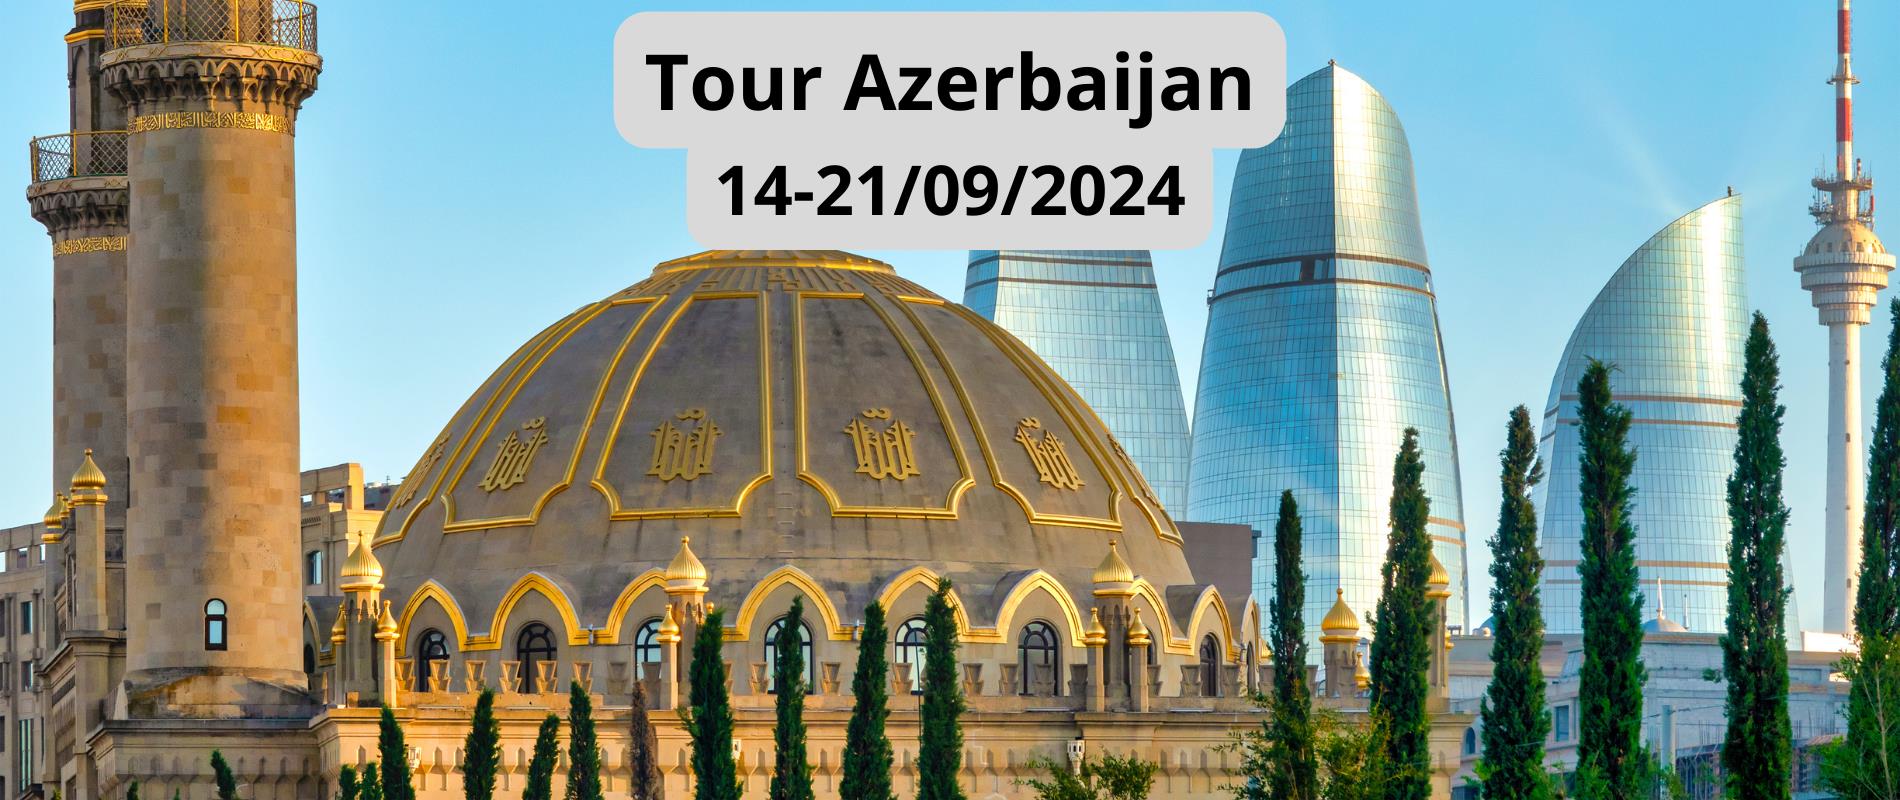 Tour Azerbaijan, e le opere di Zaha Hadid di Baku